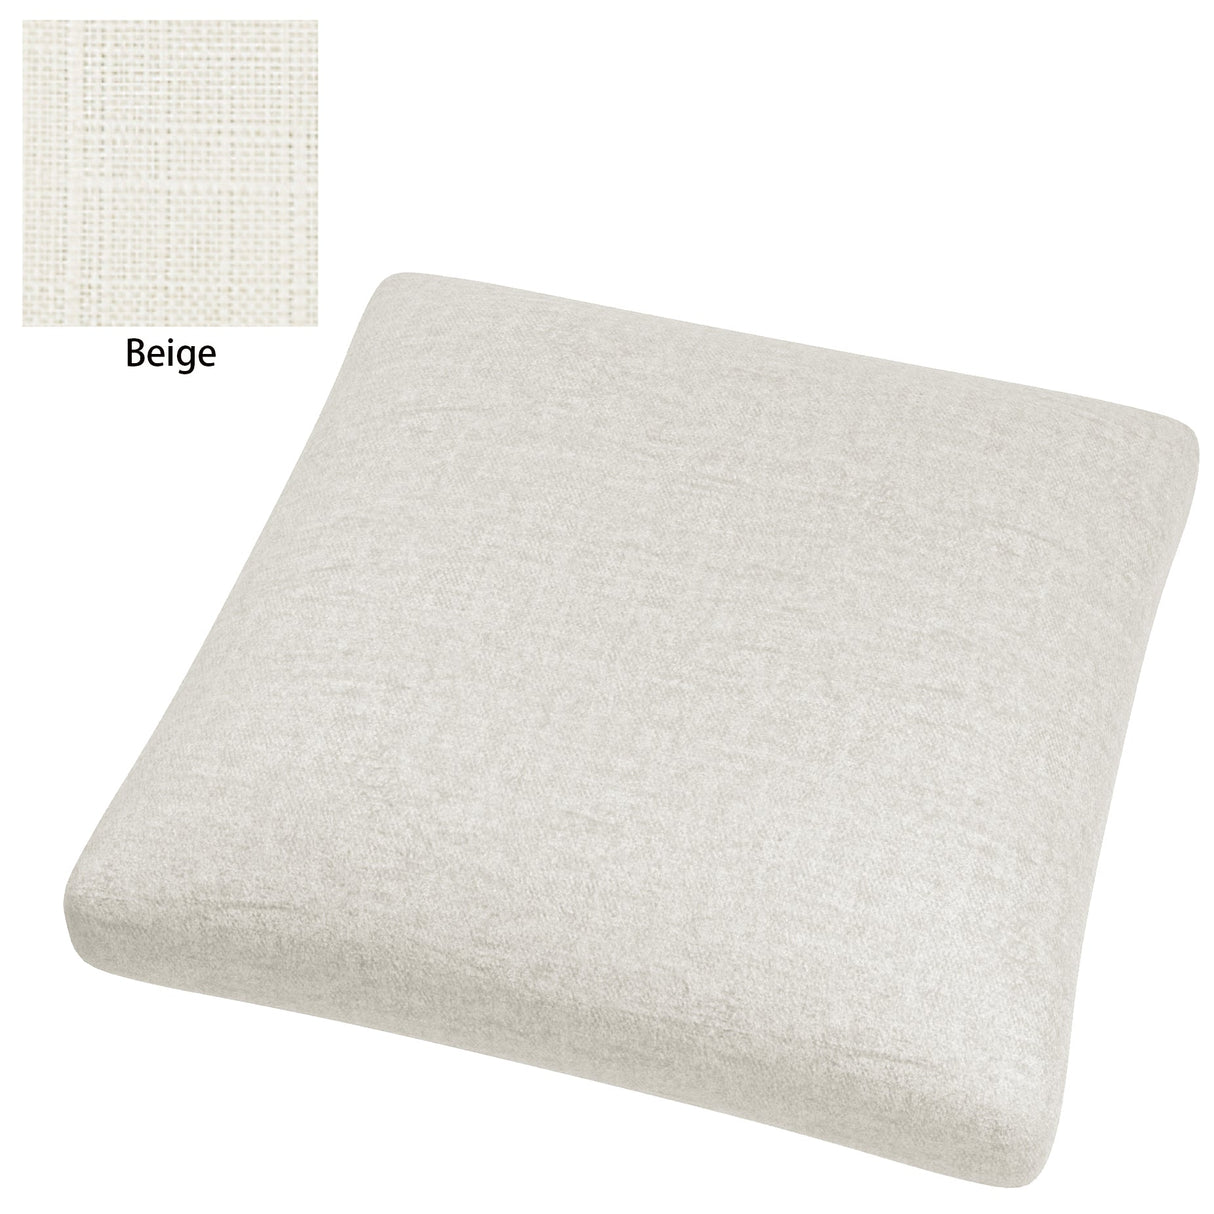 GEX Custom Size Bench Cushion Pads Patio Tufted Swing High Density Foam - GexWorldwide